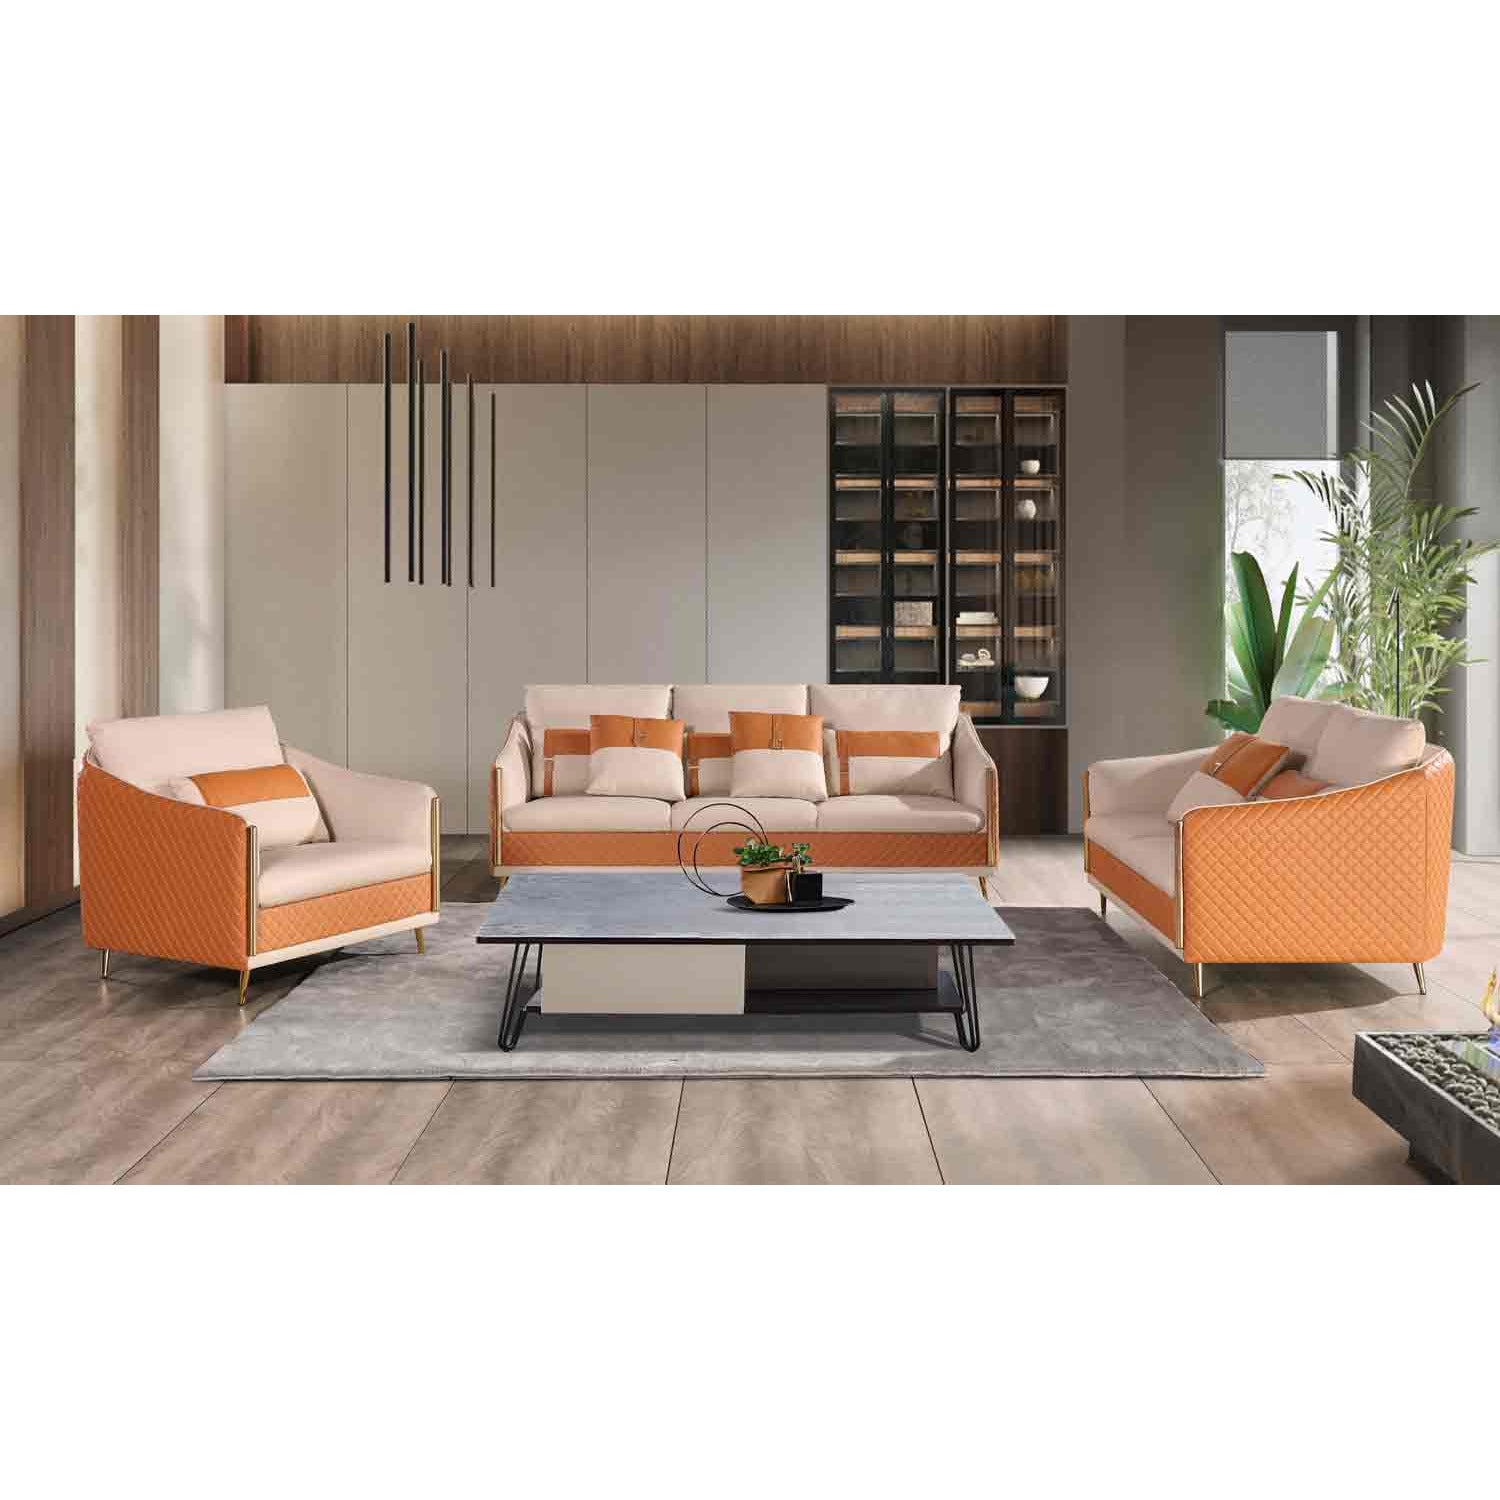 European Furniture - Icaro 3 Piece Living Room Set in Off White-Orange - 64455-3SET - New Star Living